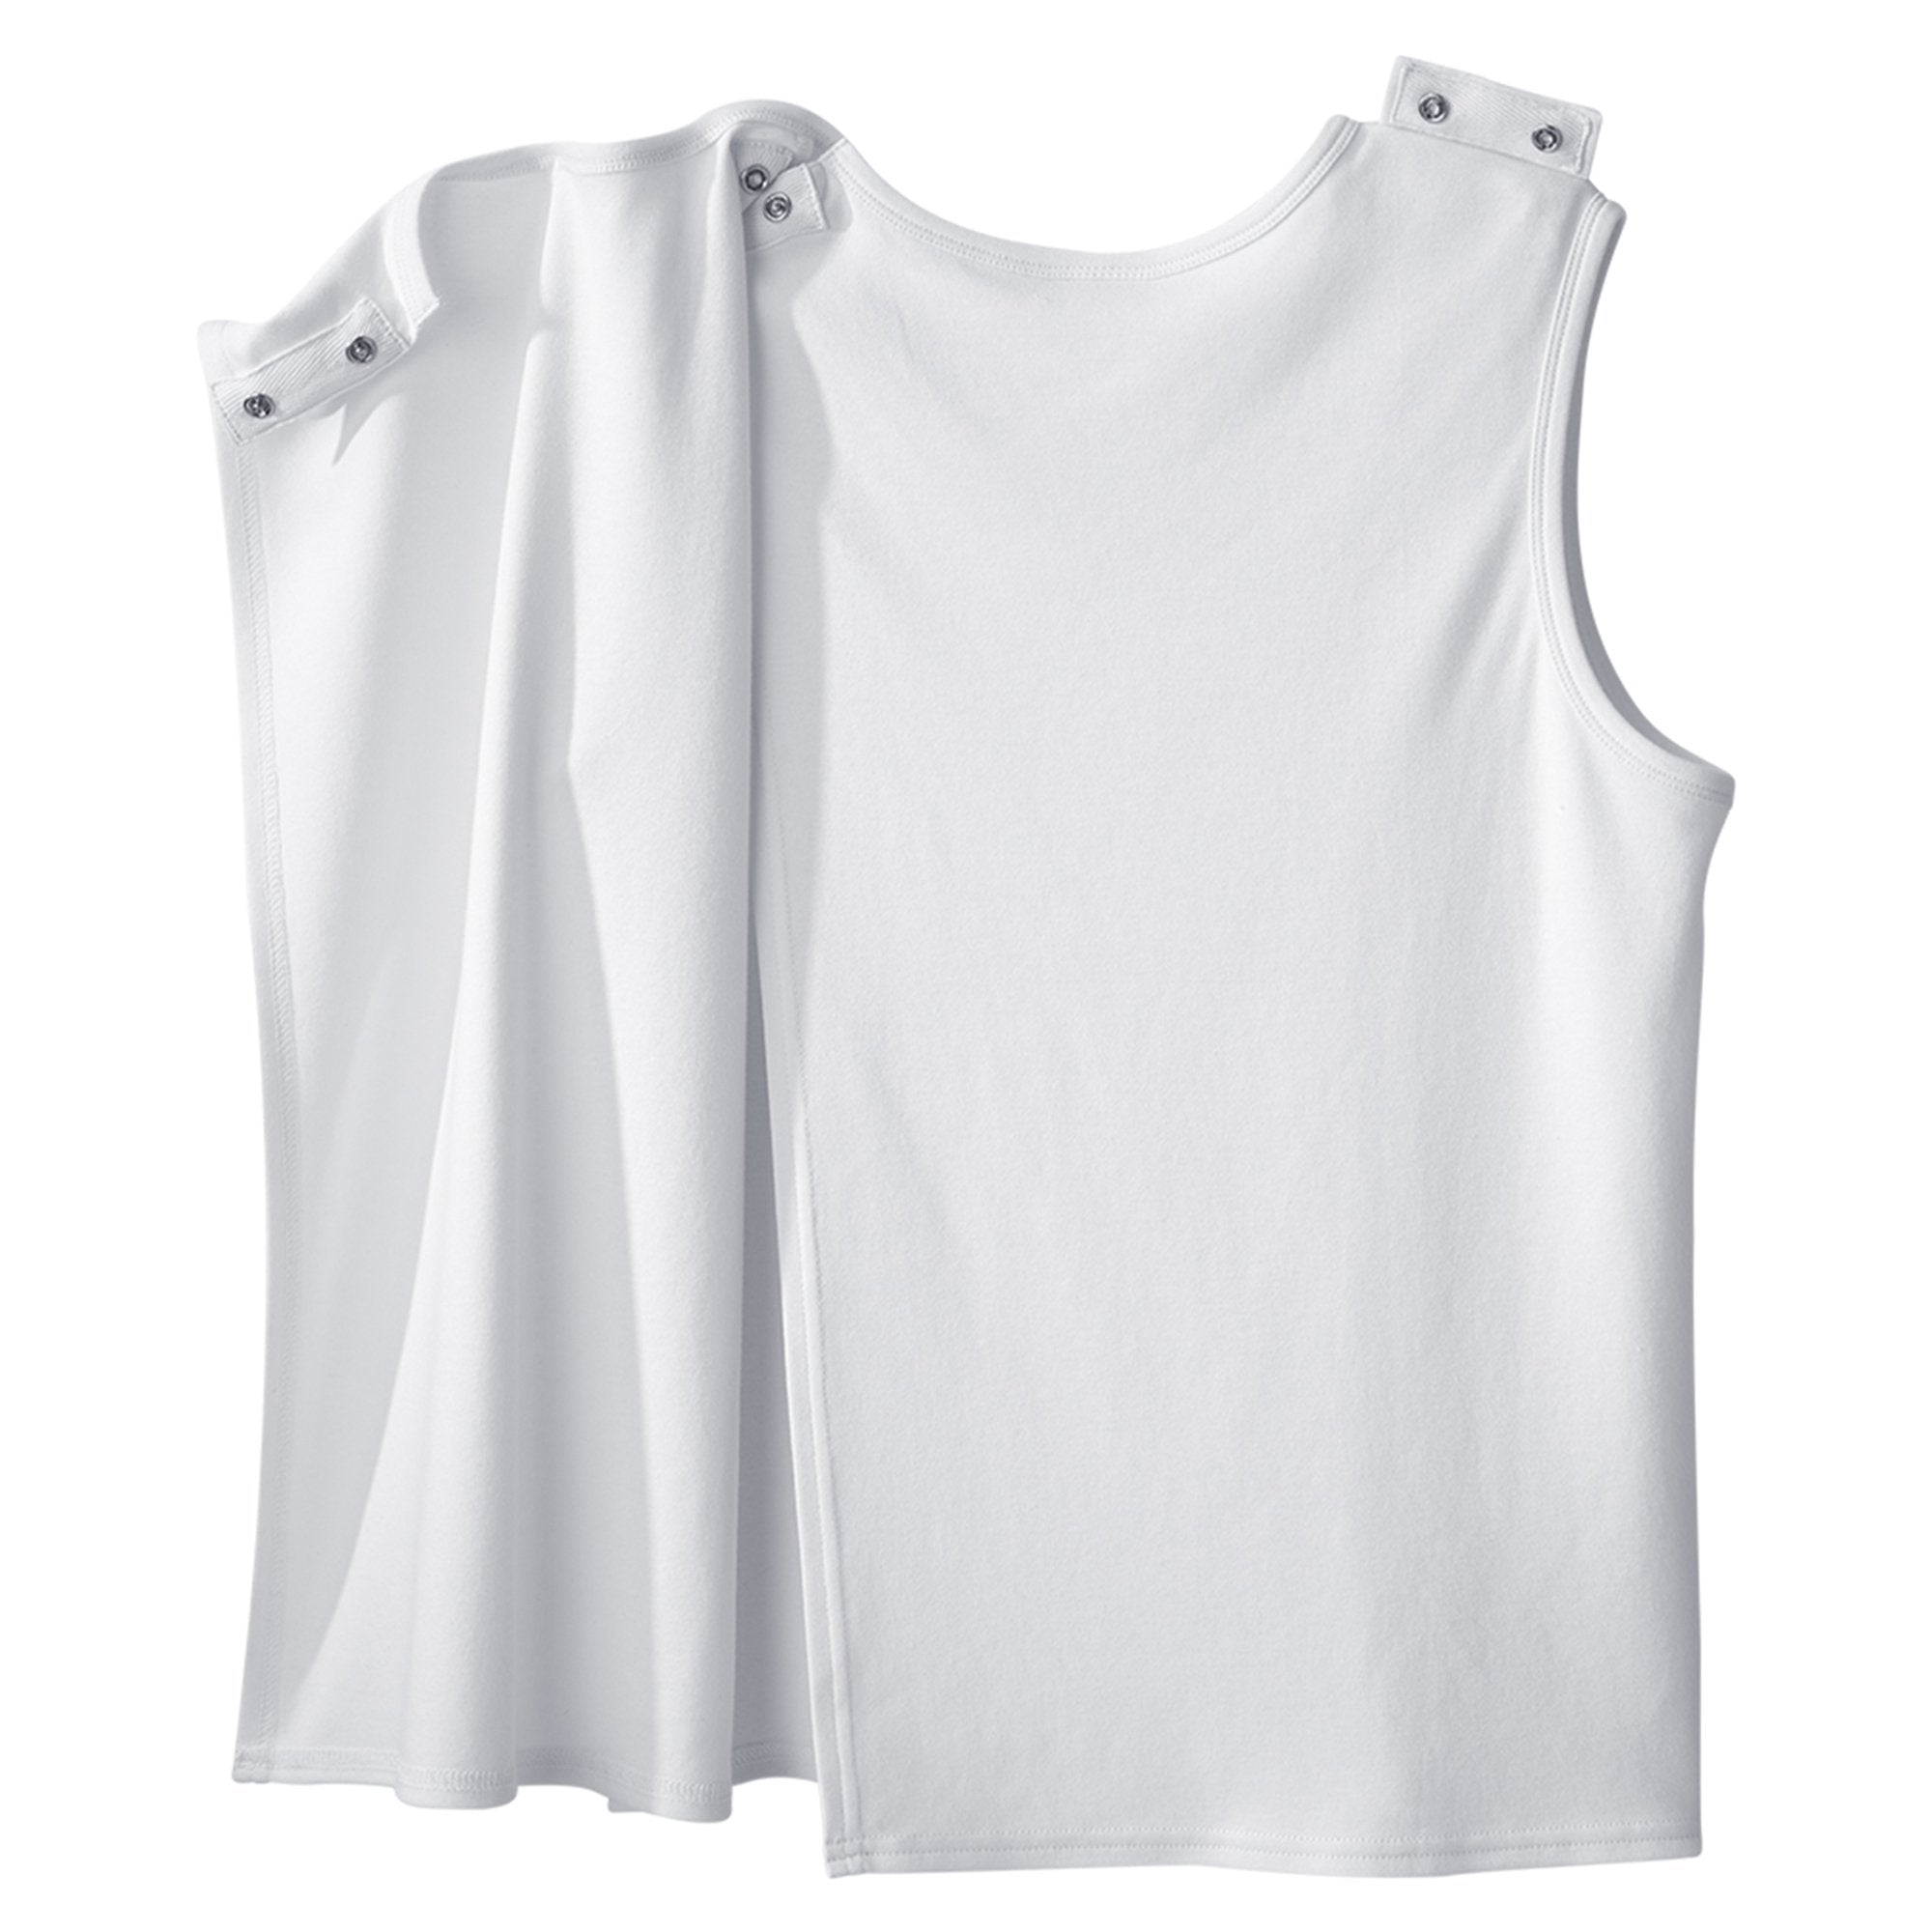 Adaptive Undershirt Silverts Small White Without Pockets Sleeveless Female